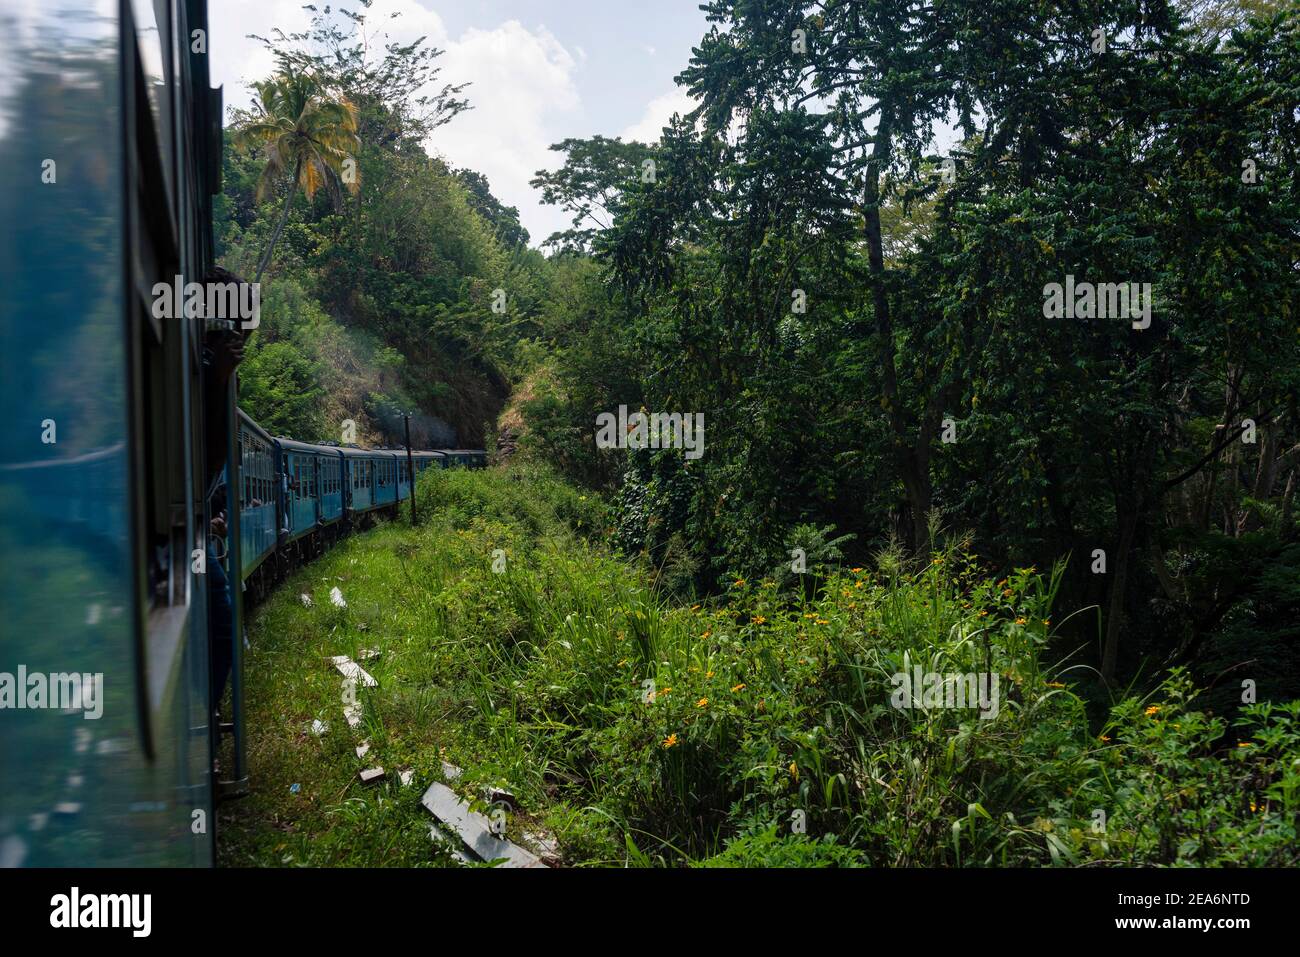 Blue Train of the Sri Lanka Railway, Scenic train journey through lush green forest in the hills Stock Photo